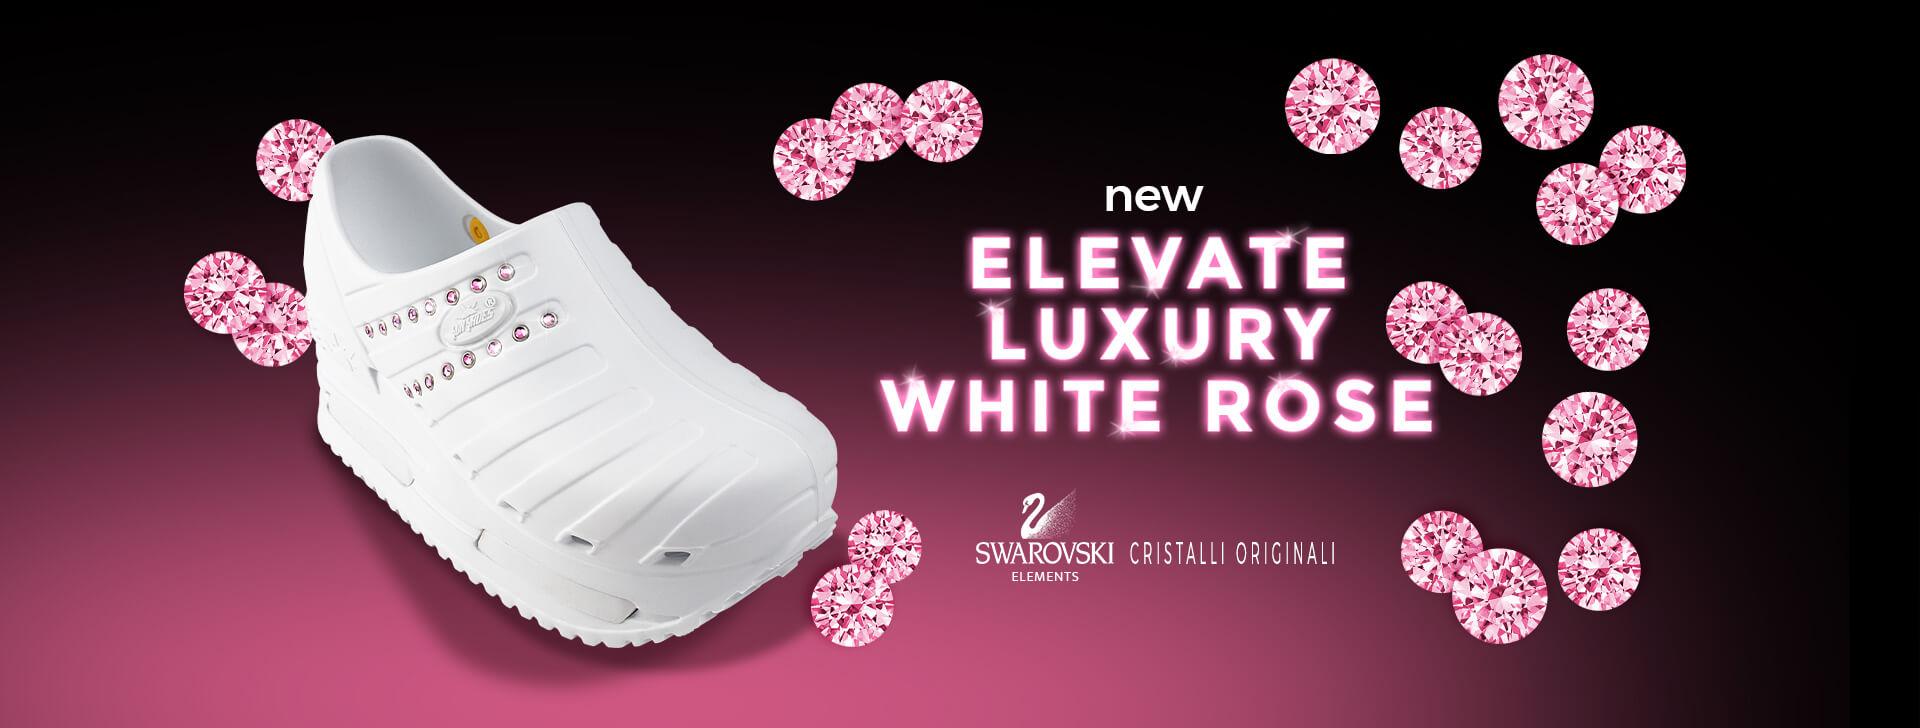 Elevate Luxury White Rose